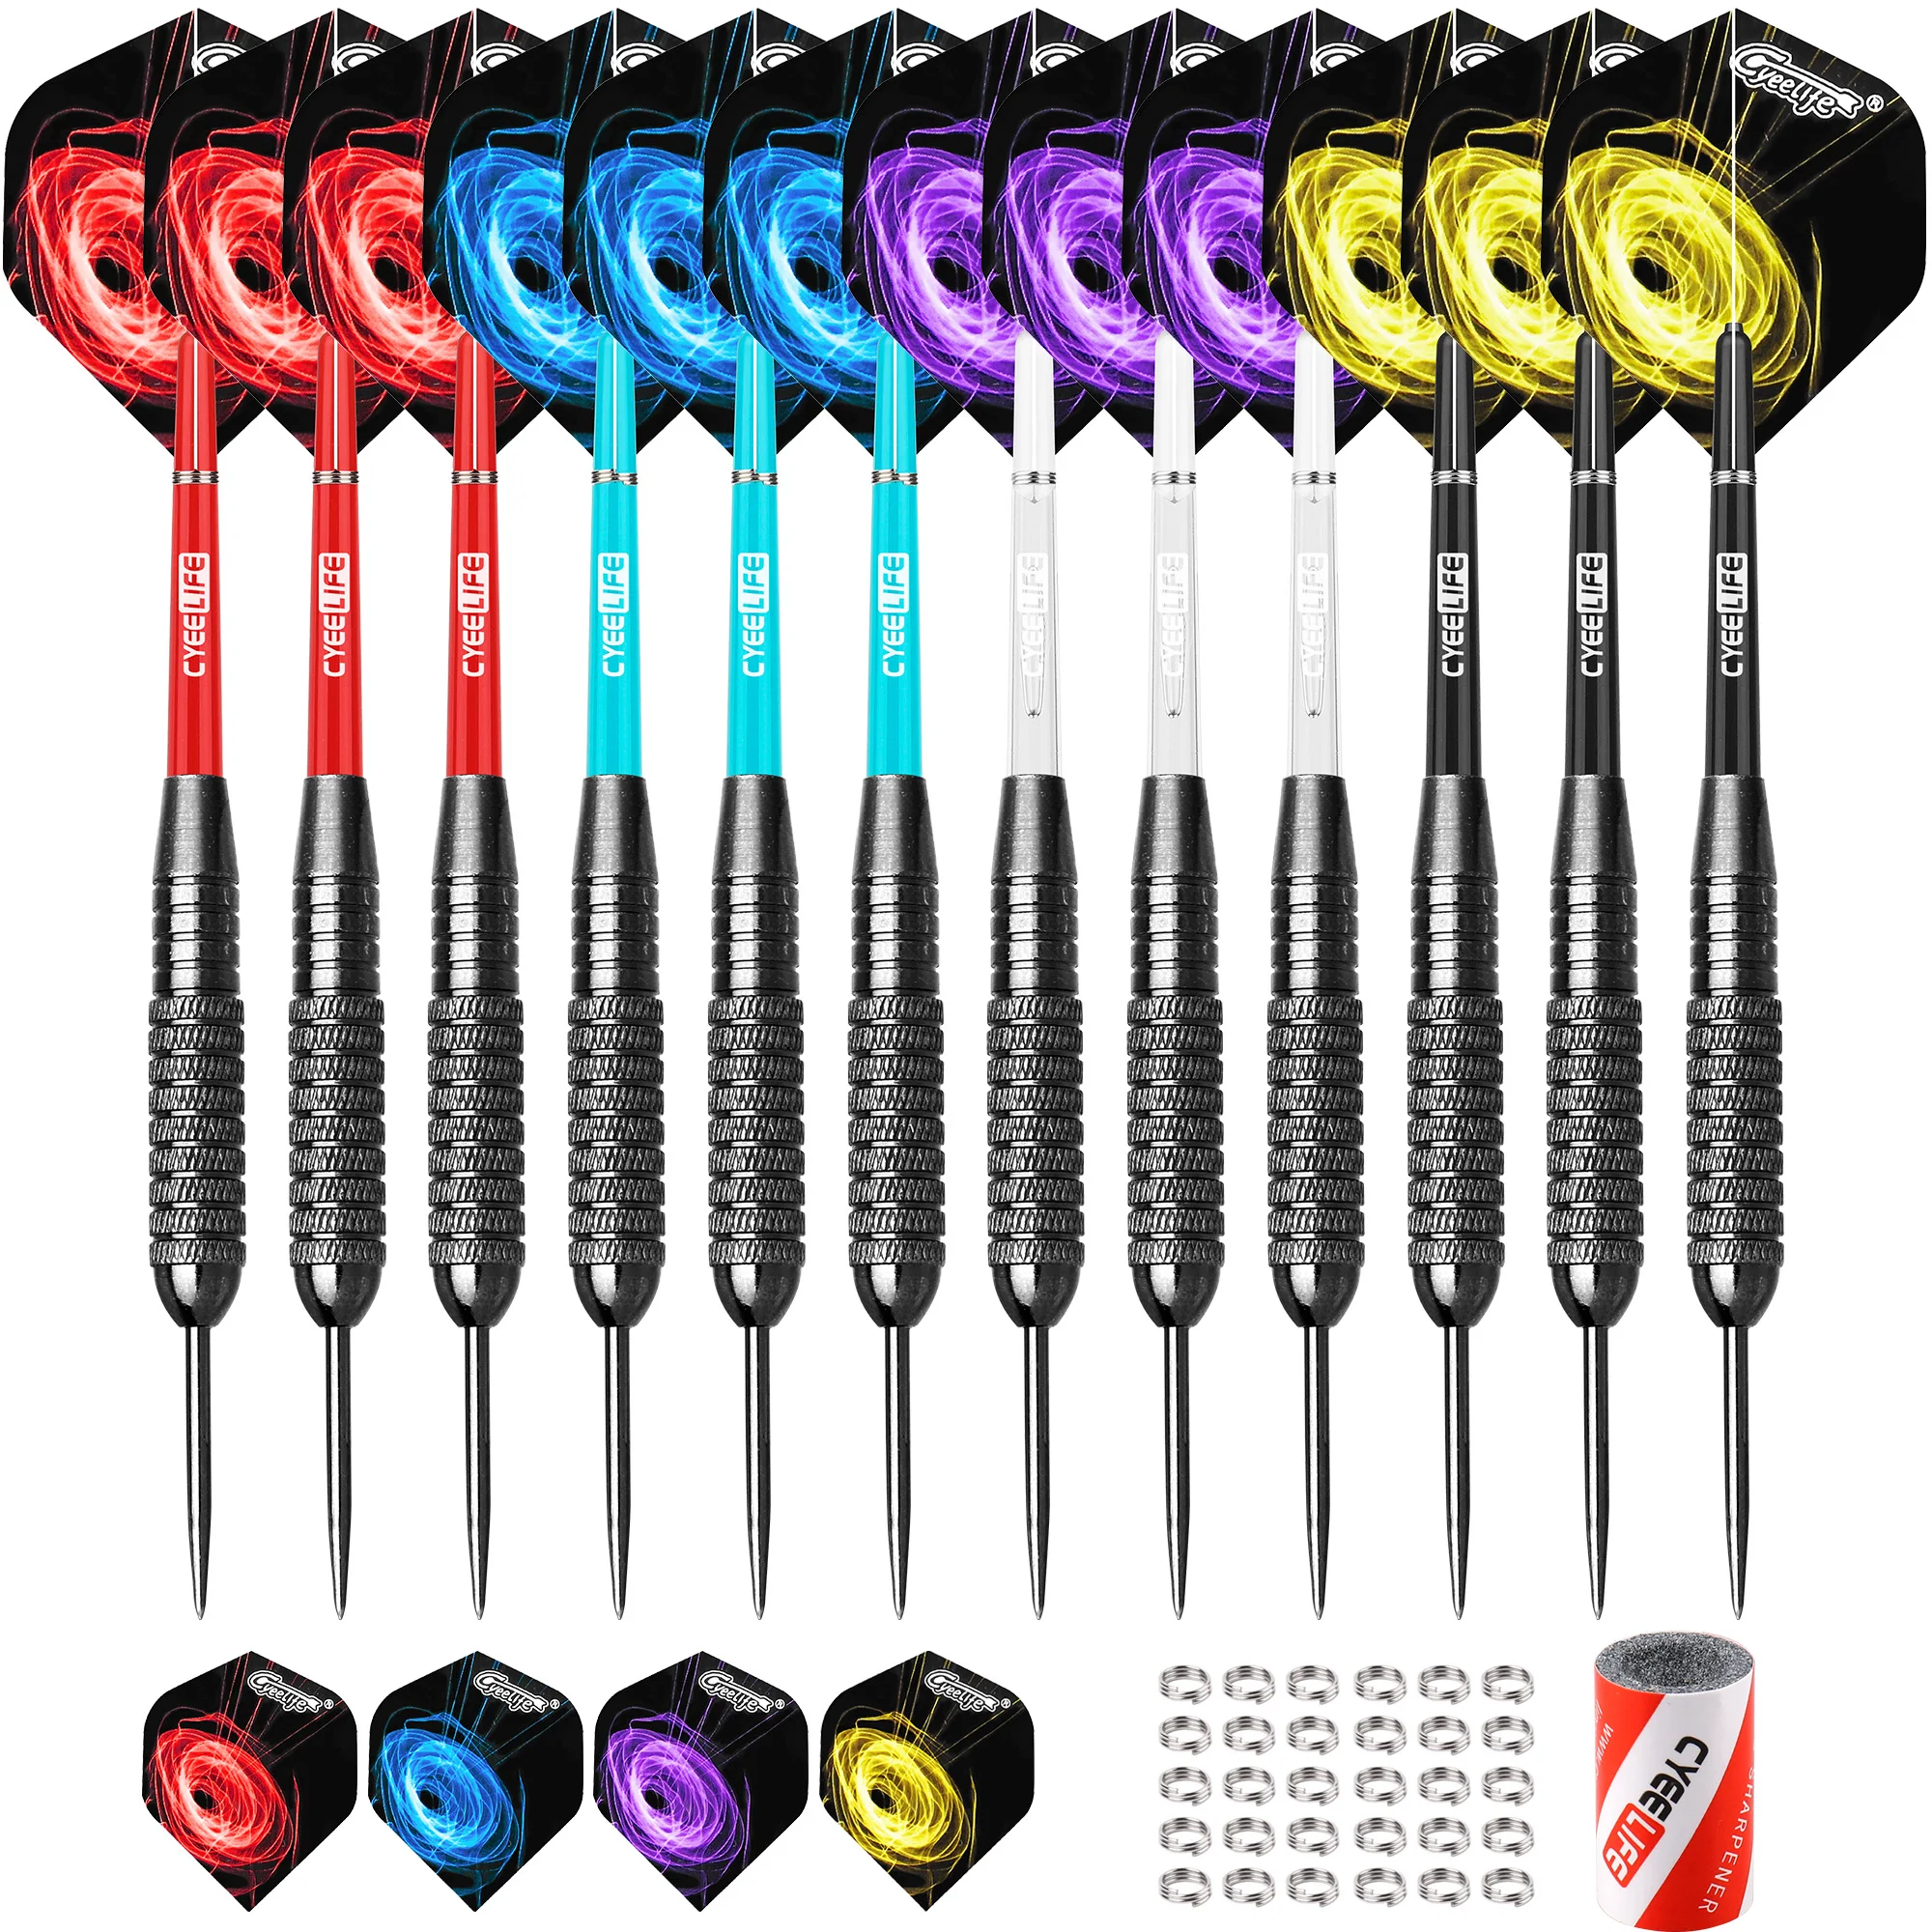 

Cyeelife 4 Colors PVC Shafts and PET Flights 22g 12 packs Steel Darts Set with Metal O Rings and Sharpener, Muti color